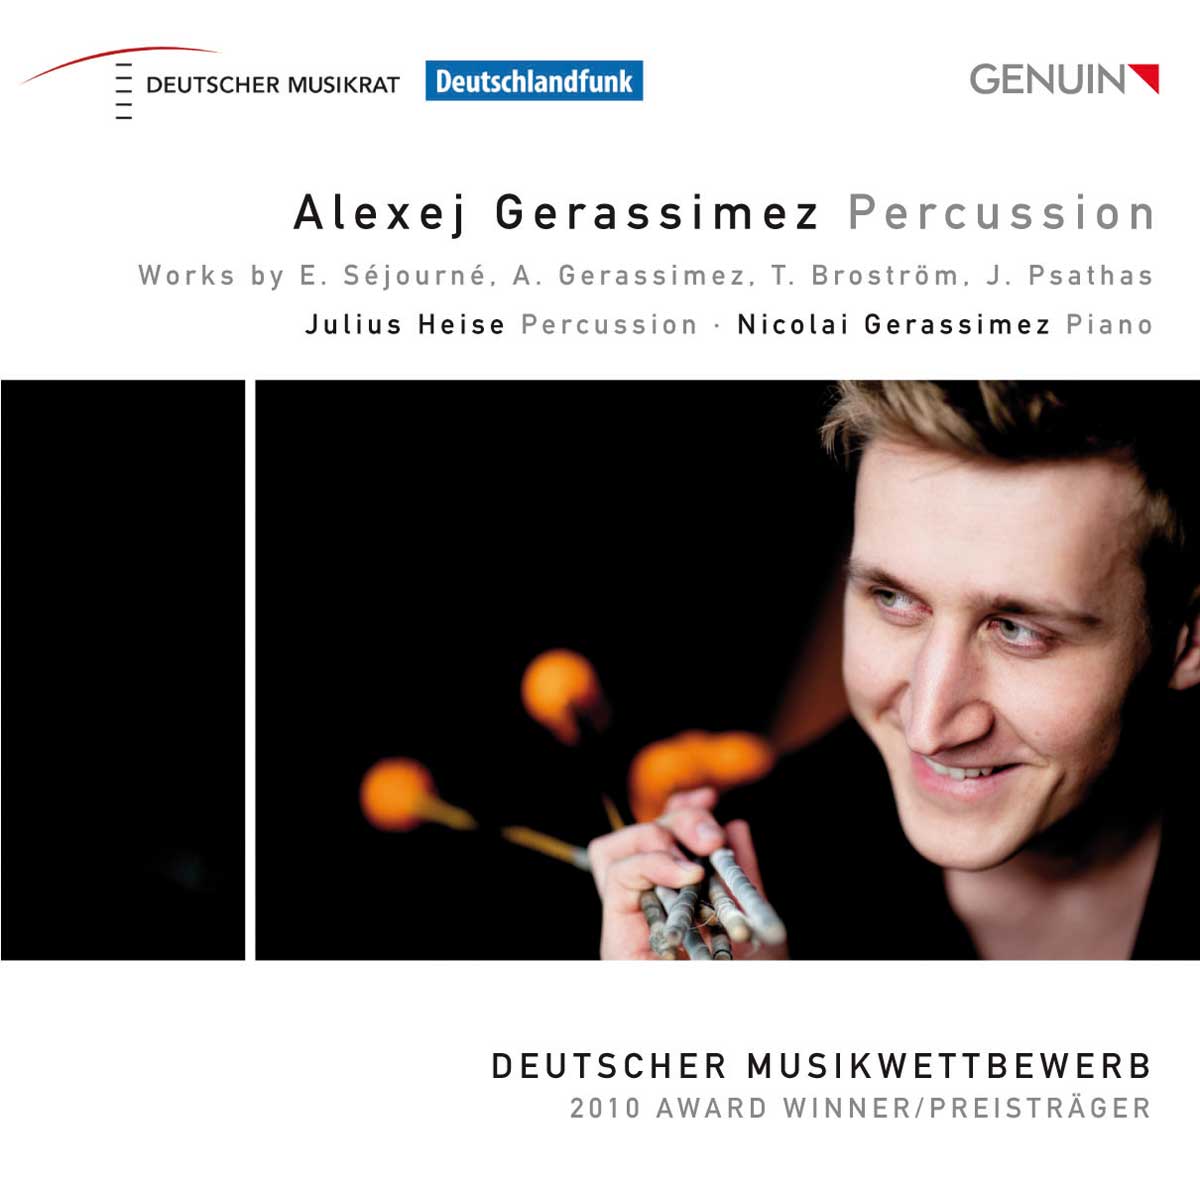 CD album cover 'Alexej Gerassimez - Percussion' (GEN 12243) with Alexej Gerassimez, Julius Heise, Nicolai Gerassimez